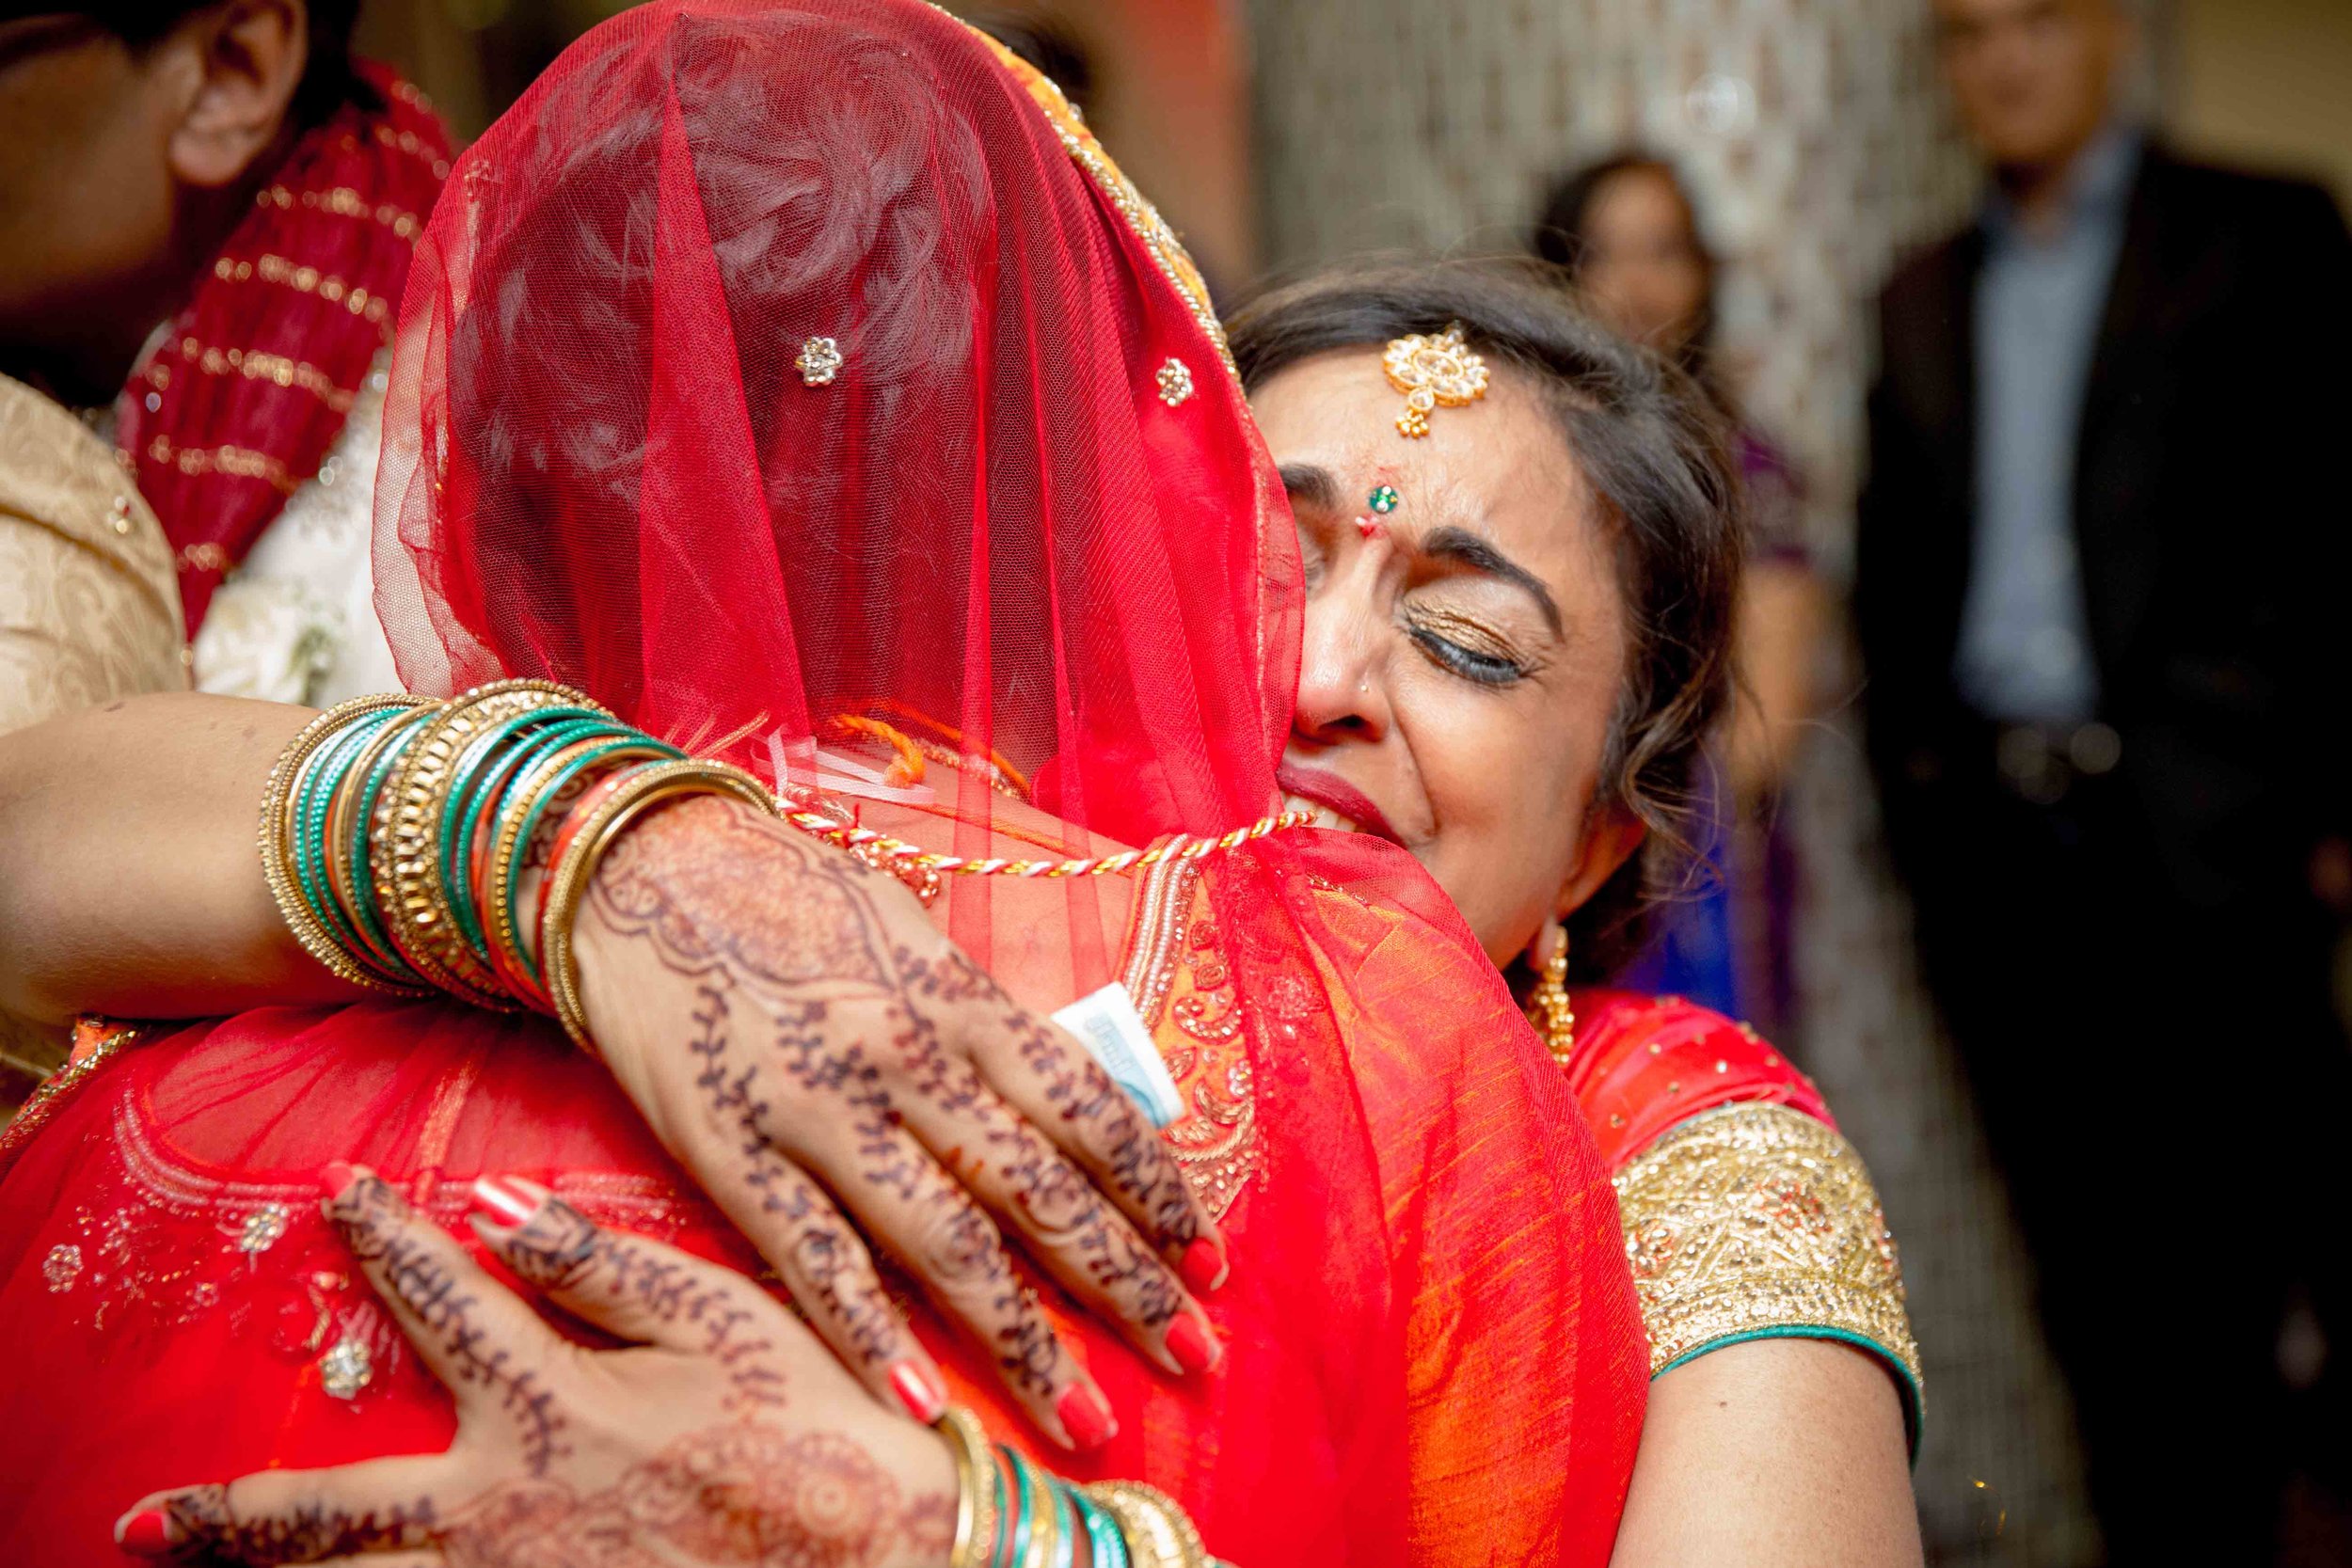 premier-banquetting-london-Hindu-asian-wedding-photographer-natalia-smith-photography-42.jpg